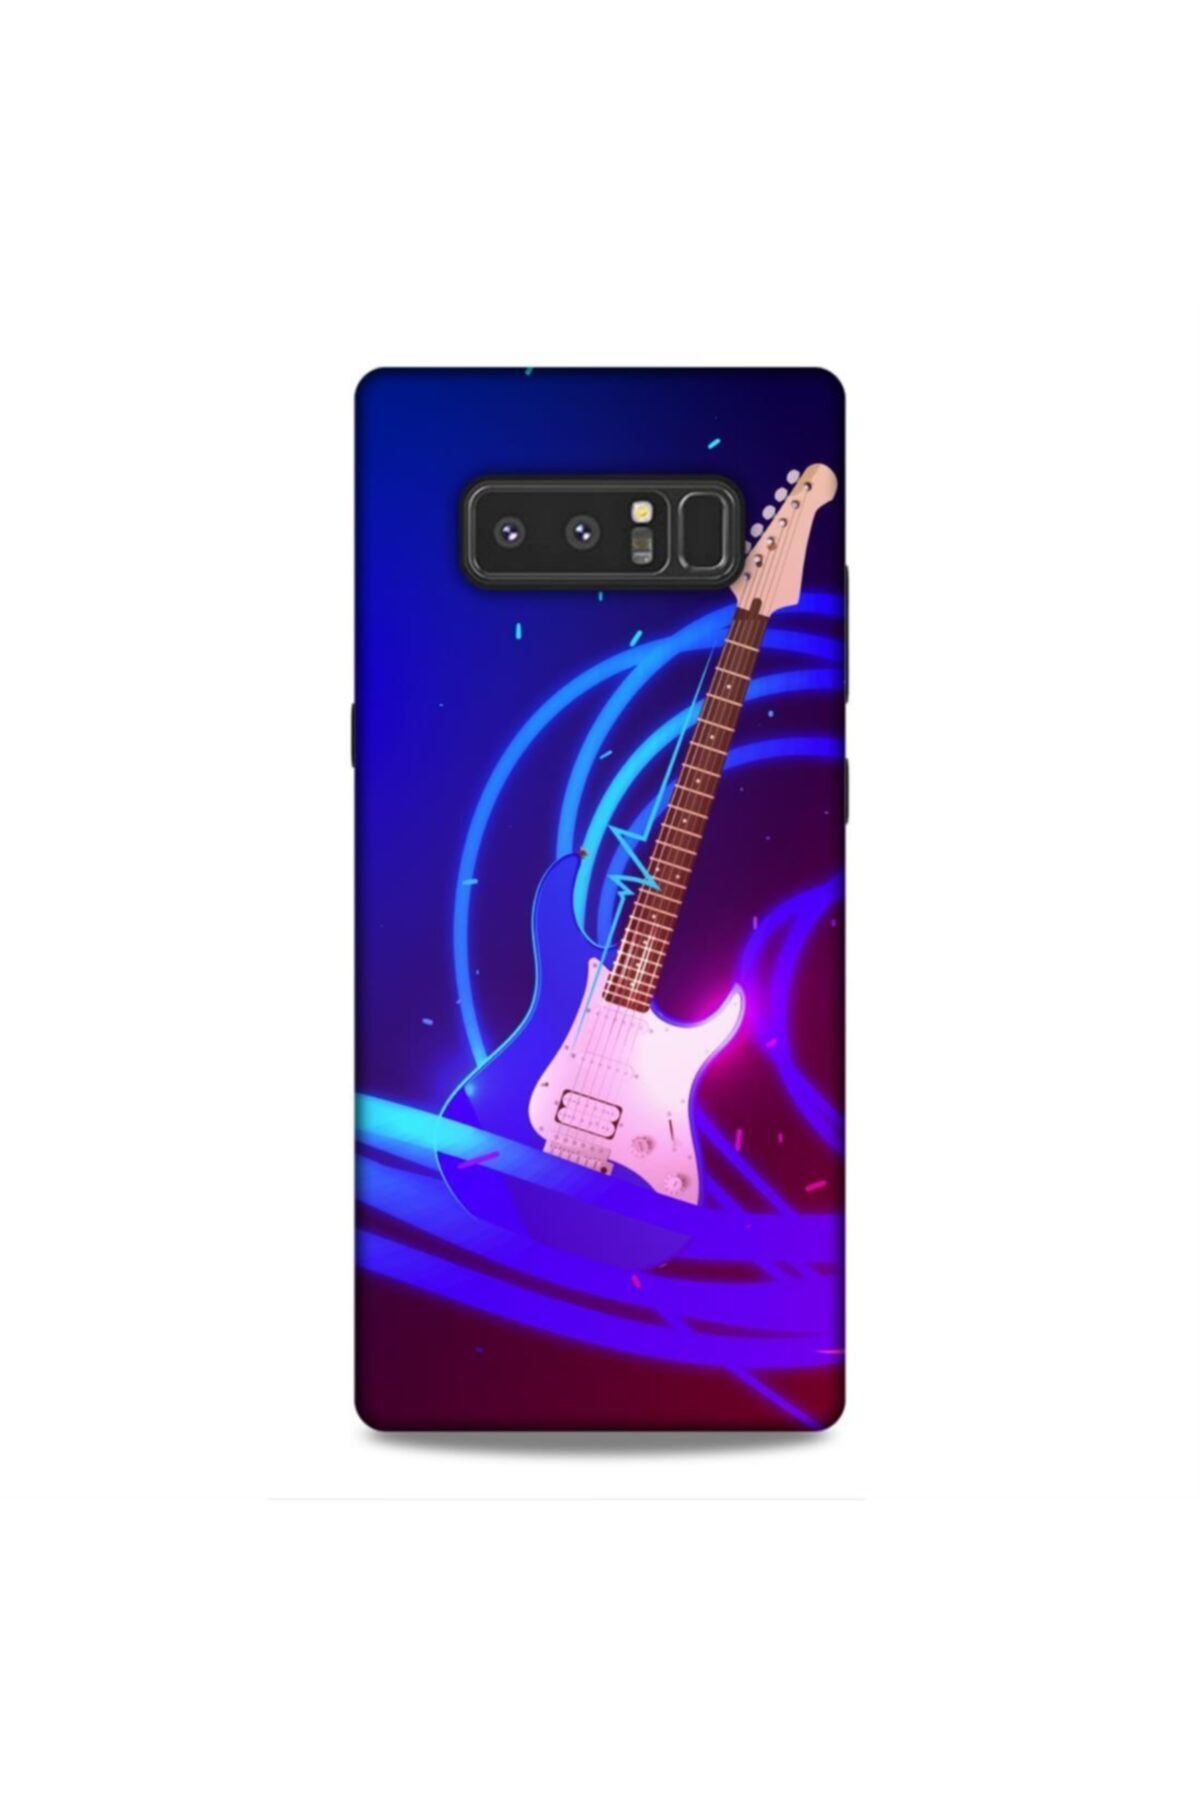 Pickcase Samsung Galaxy Note 8 Kılıf Gitar Desenli Arka Kapak